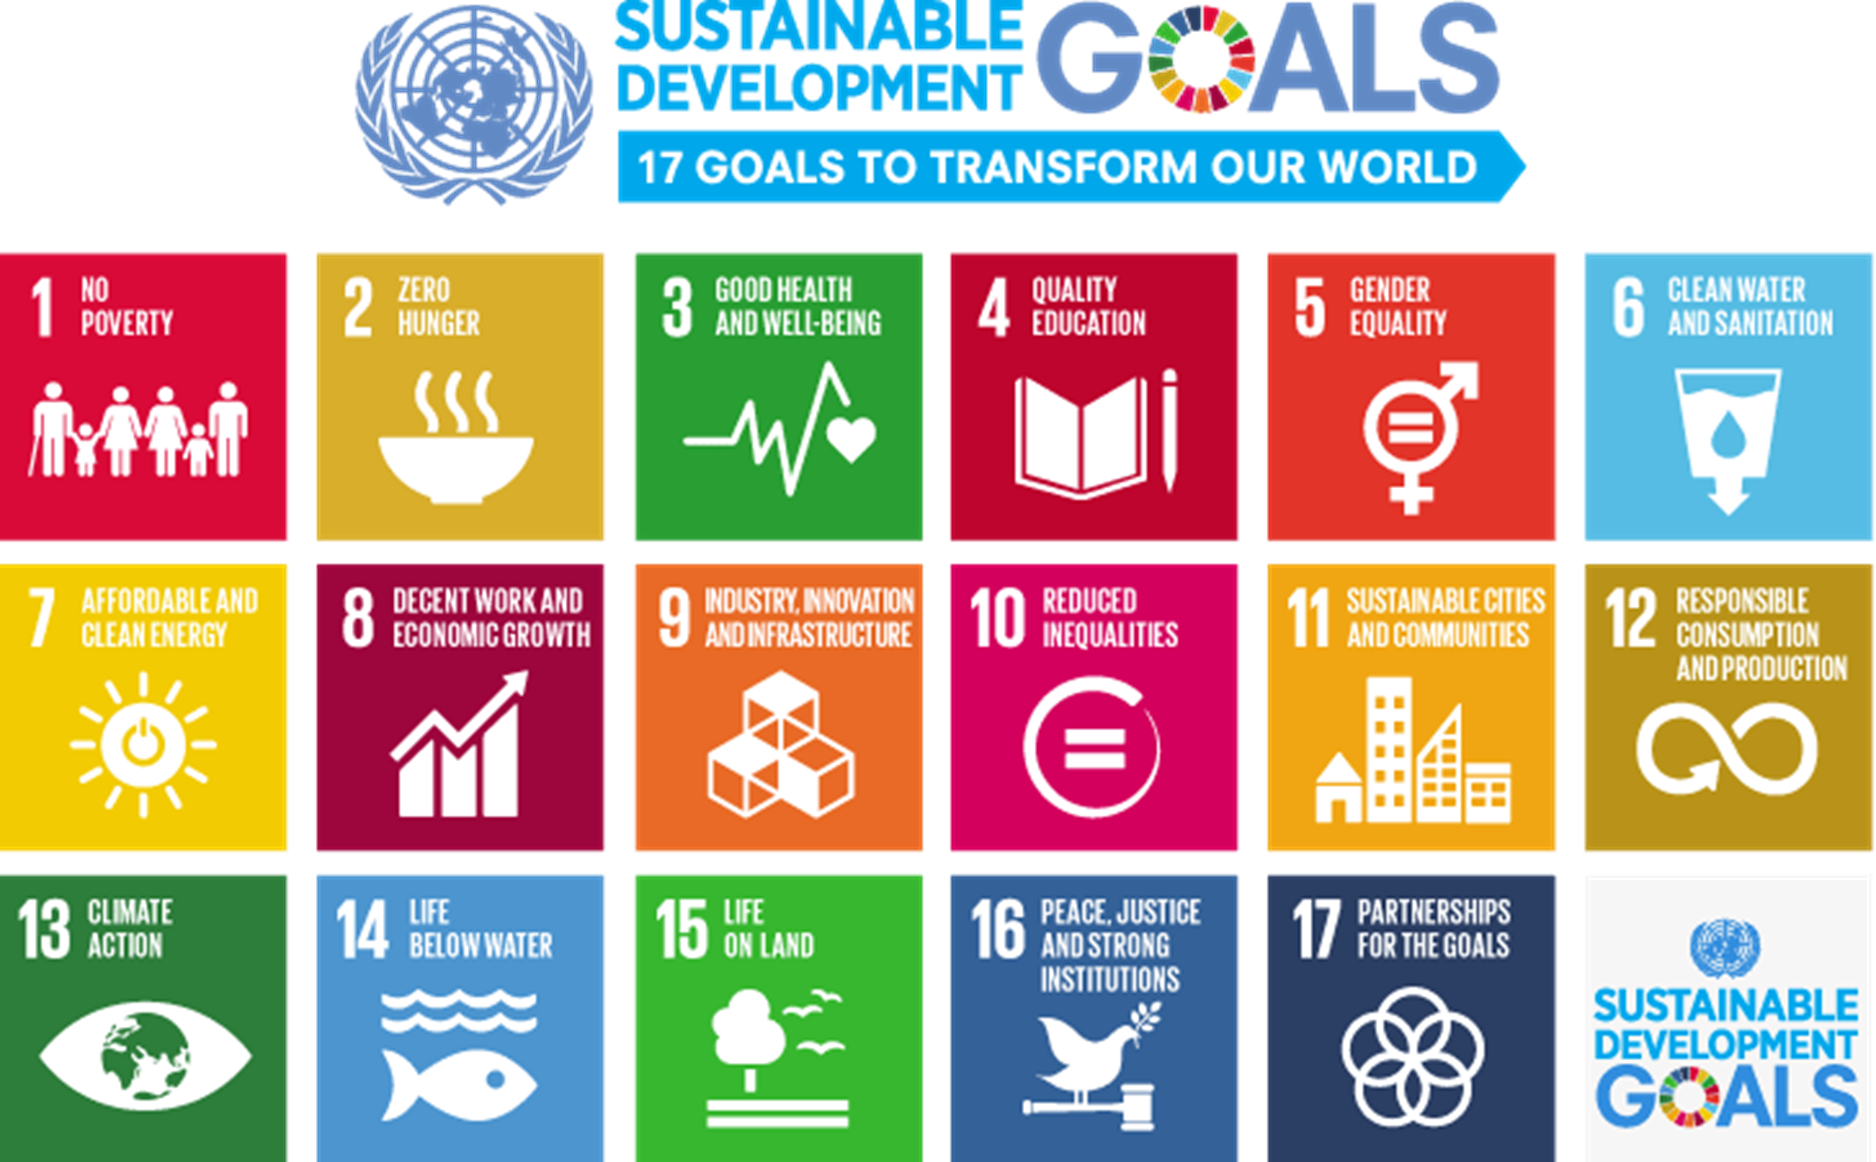 Sustainable development goals - 17 goals to transform our world